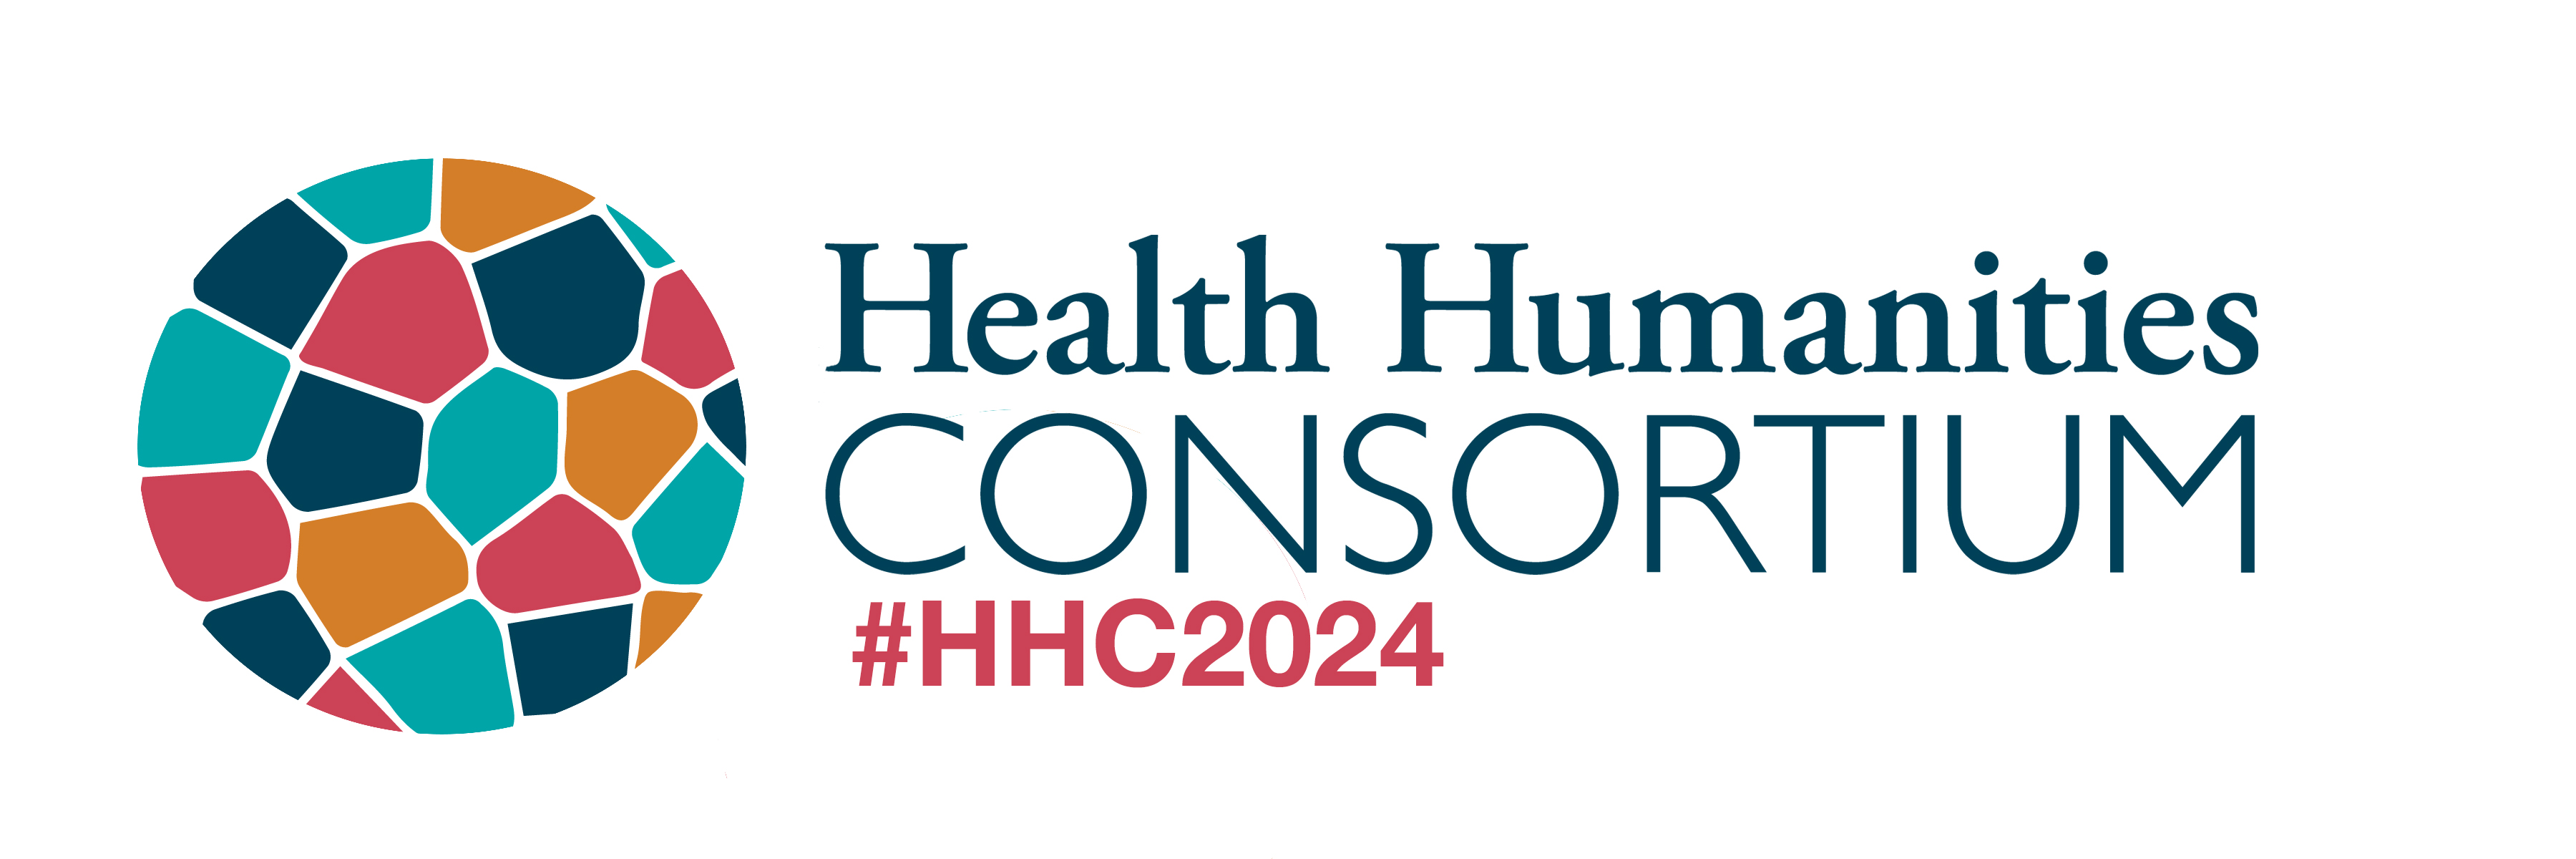 Health Humanities Consortium colorful globe logo with wording, "Health Humanities Consortium #HHC2024"